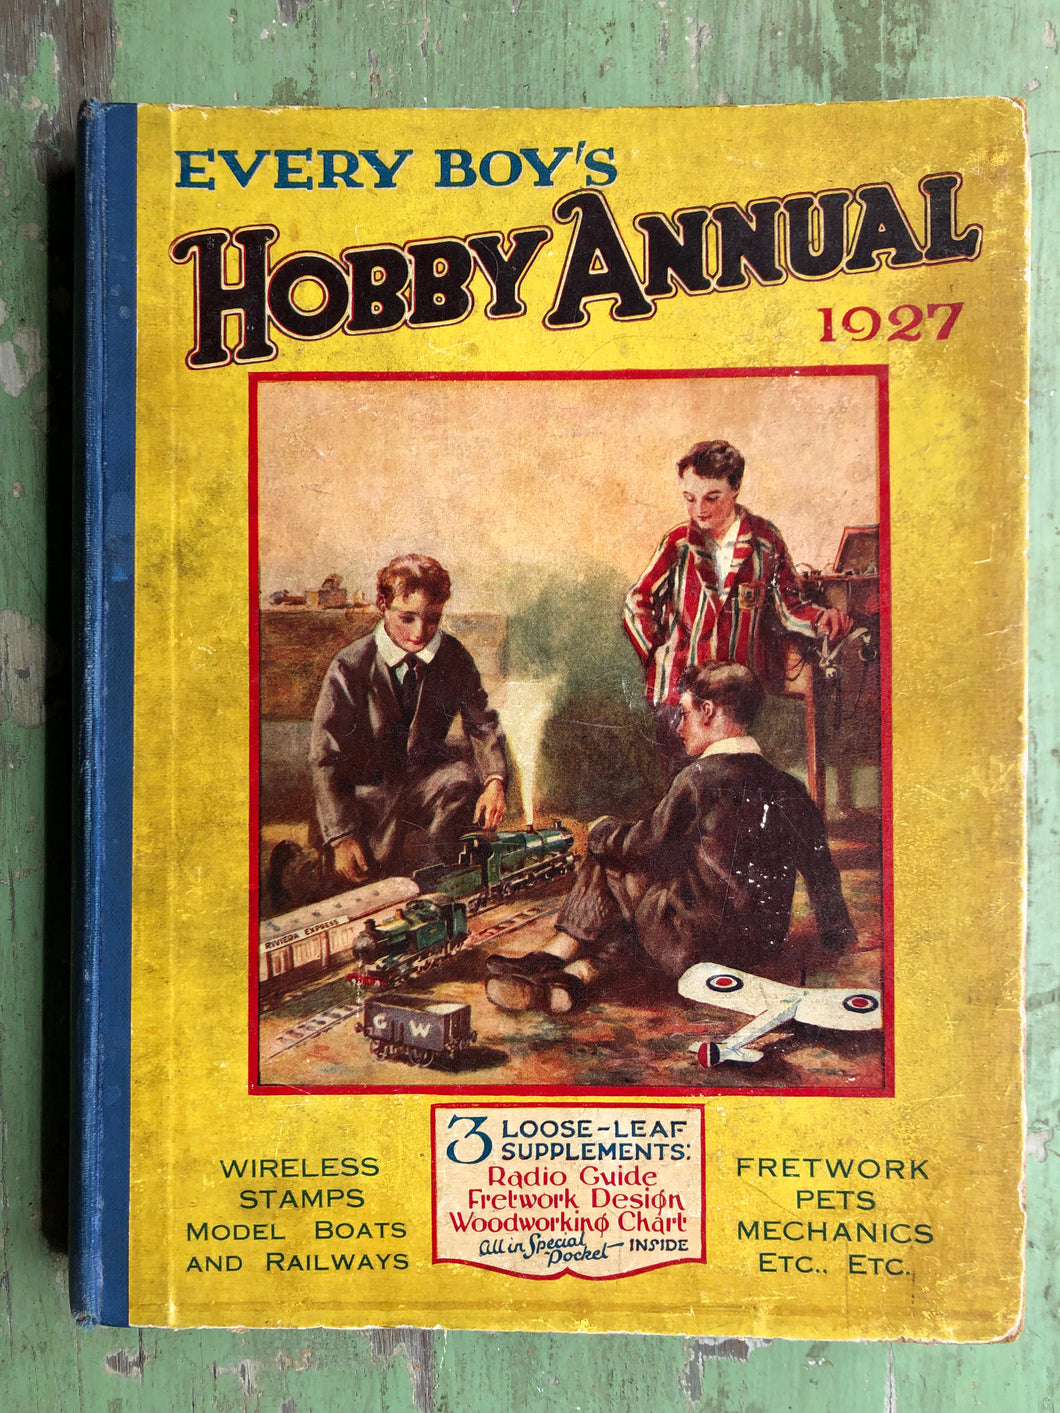 Every Boy's Hobby Annual 1927